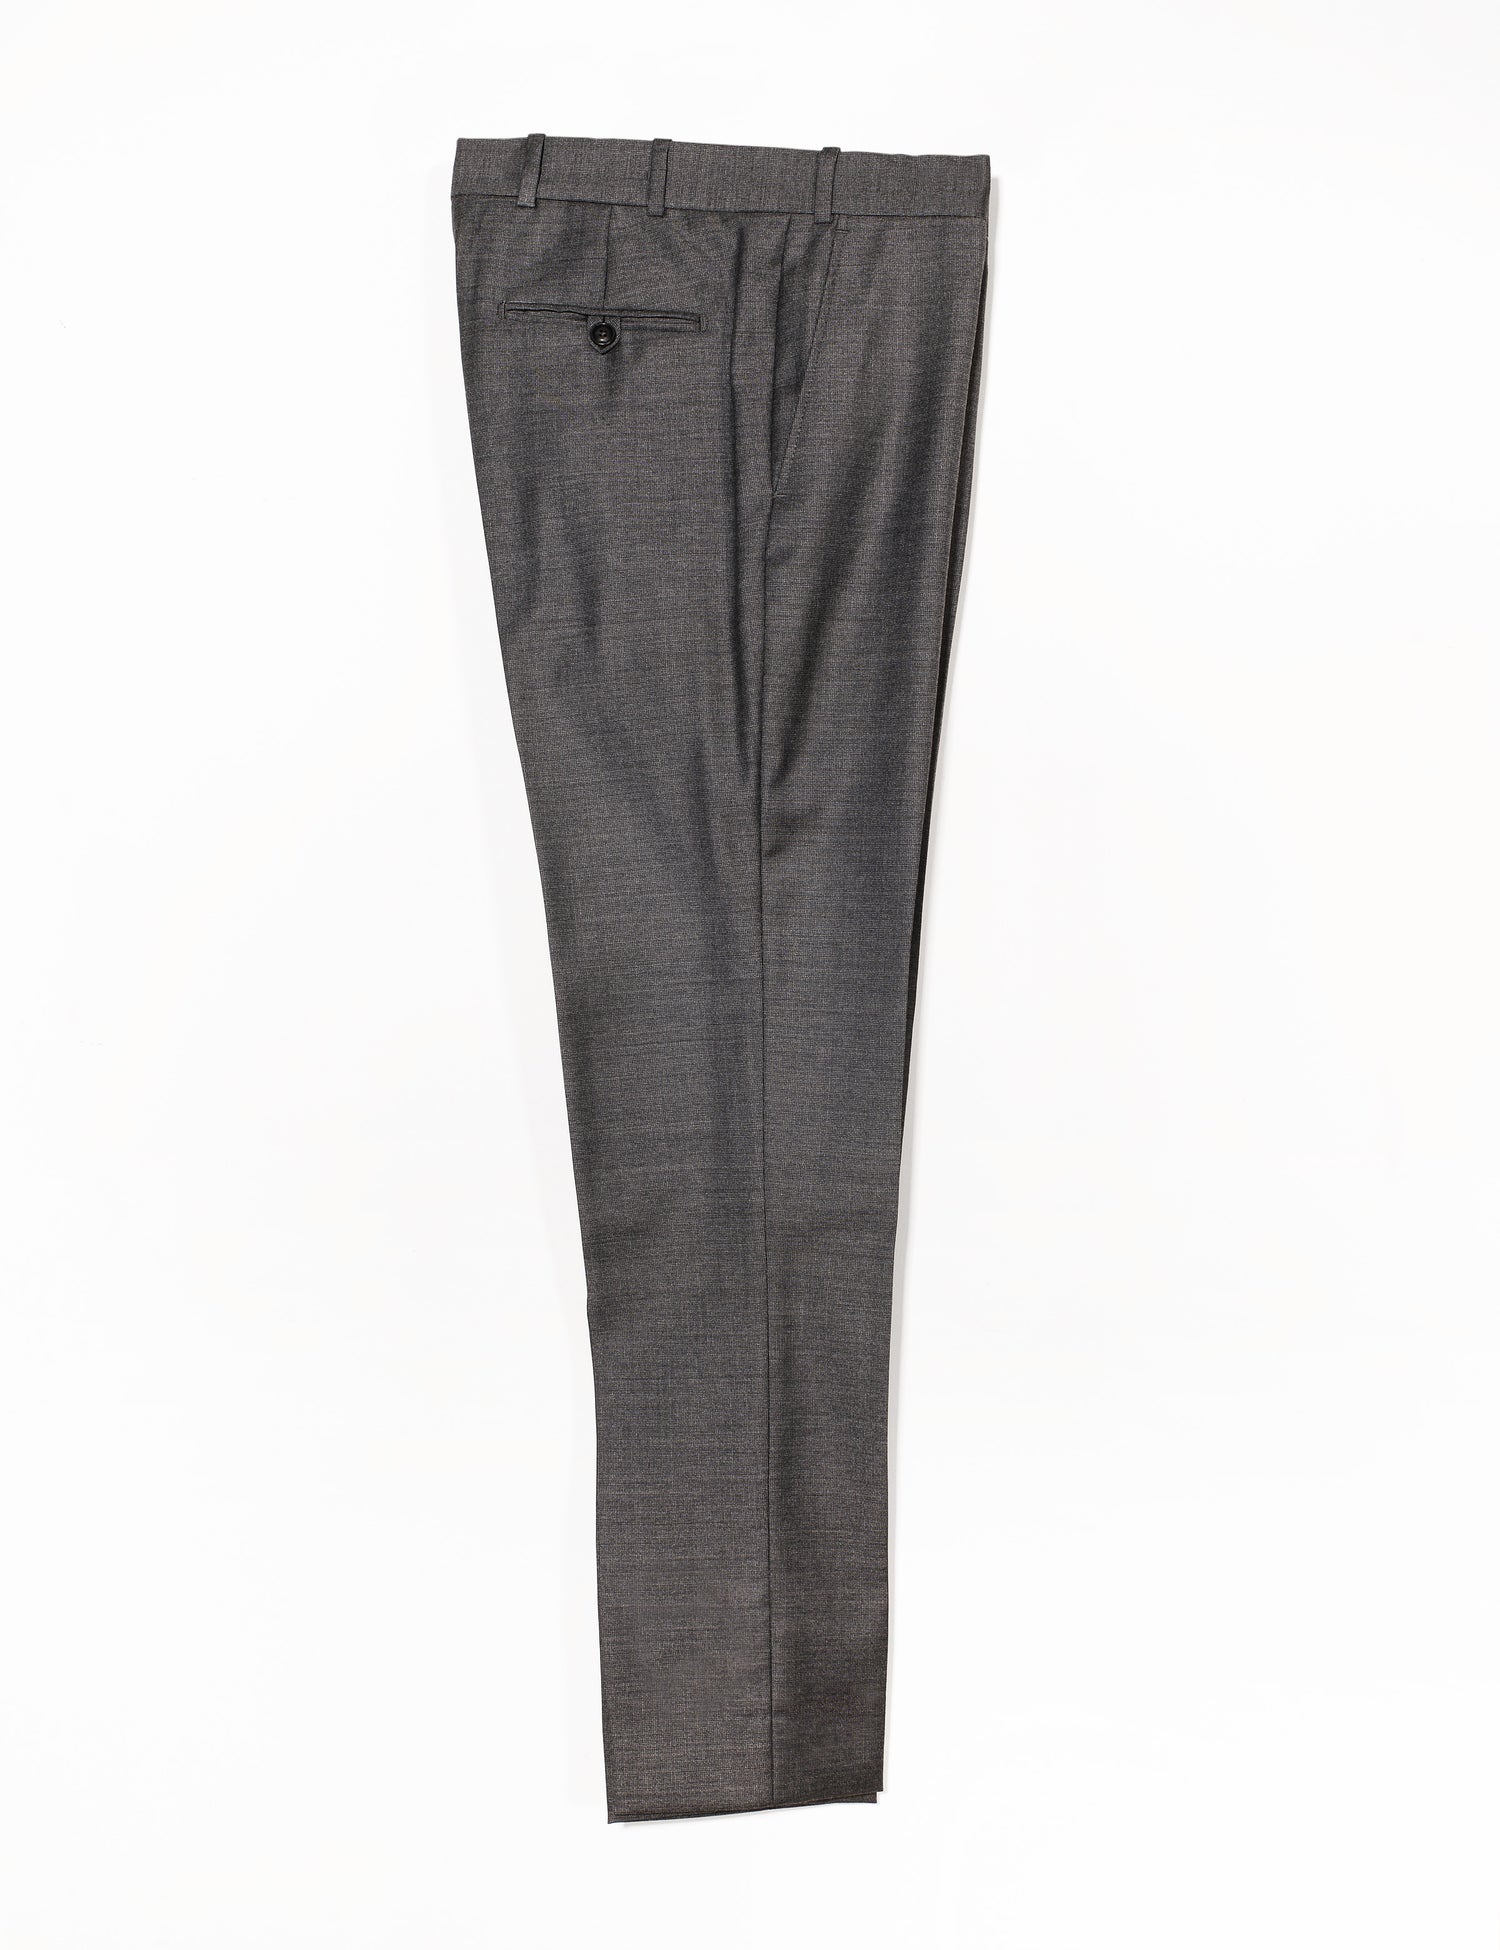 Brooklyn Tailors BKT50 Tailored Trousers in Wool Tickweave - Deep Gray full length flat shot